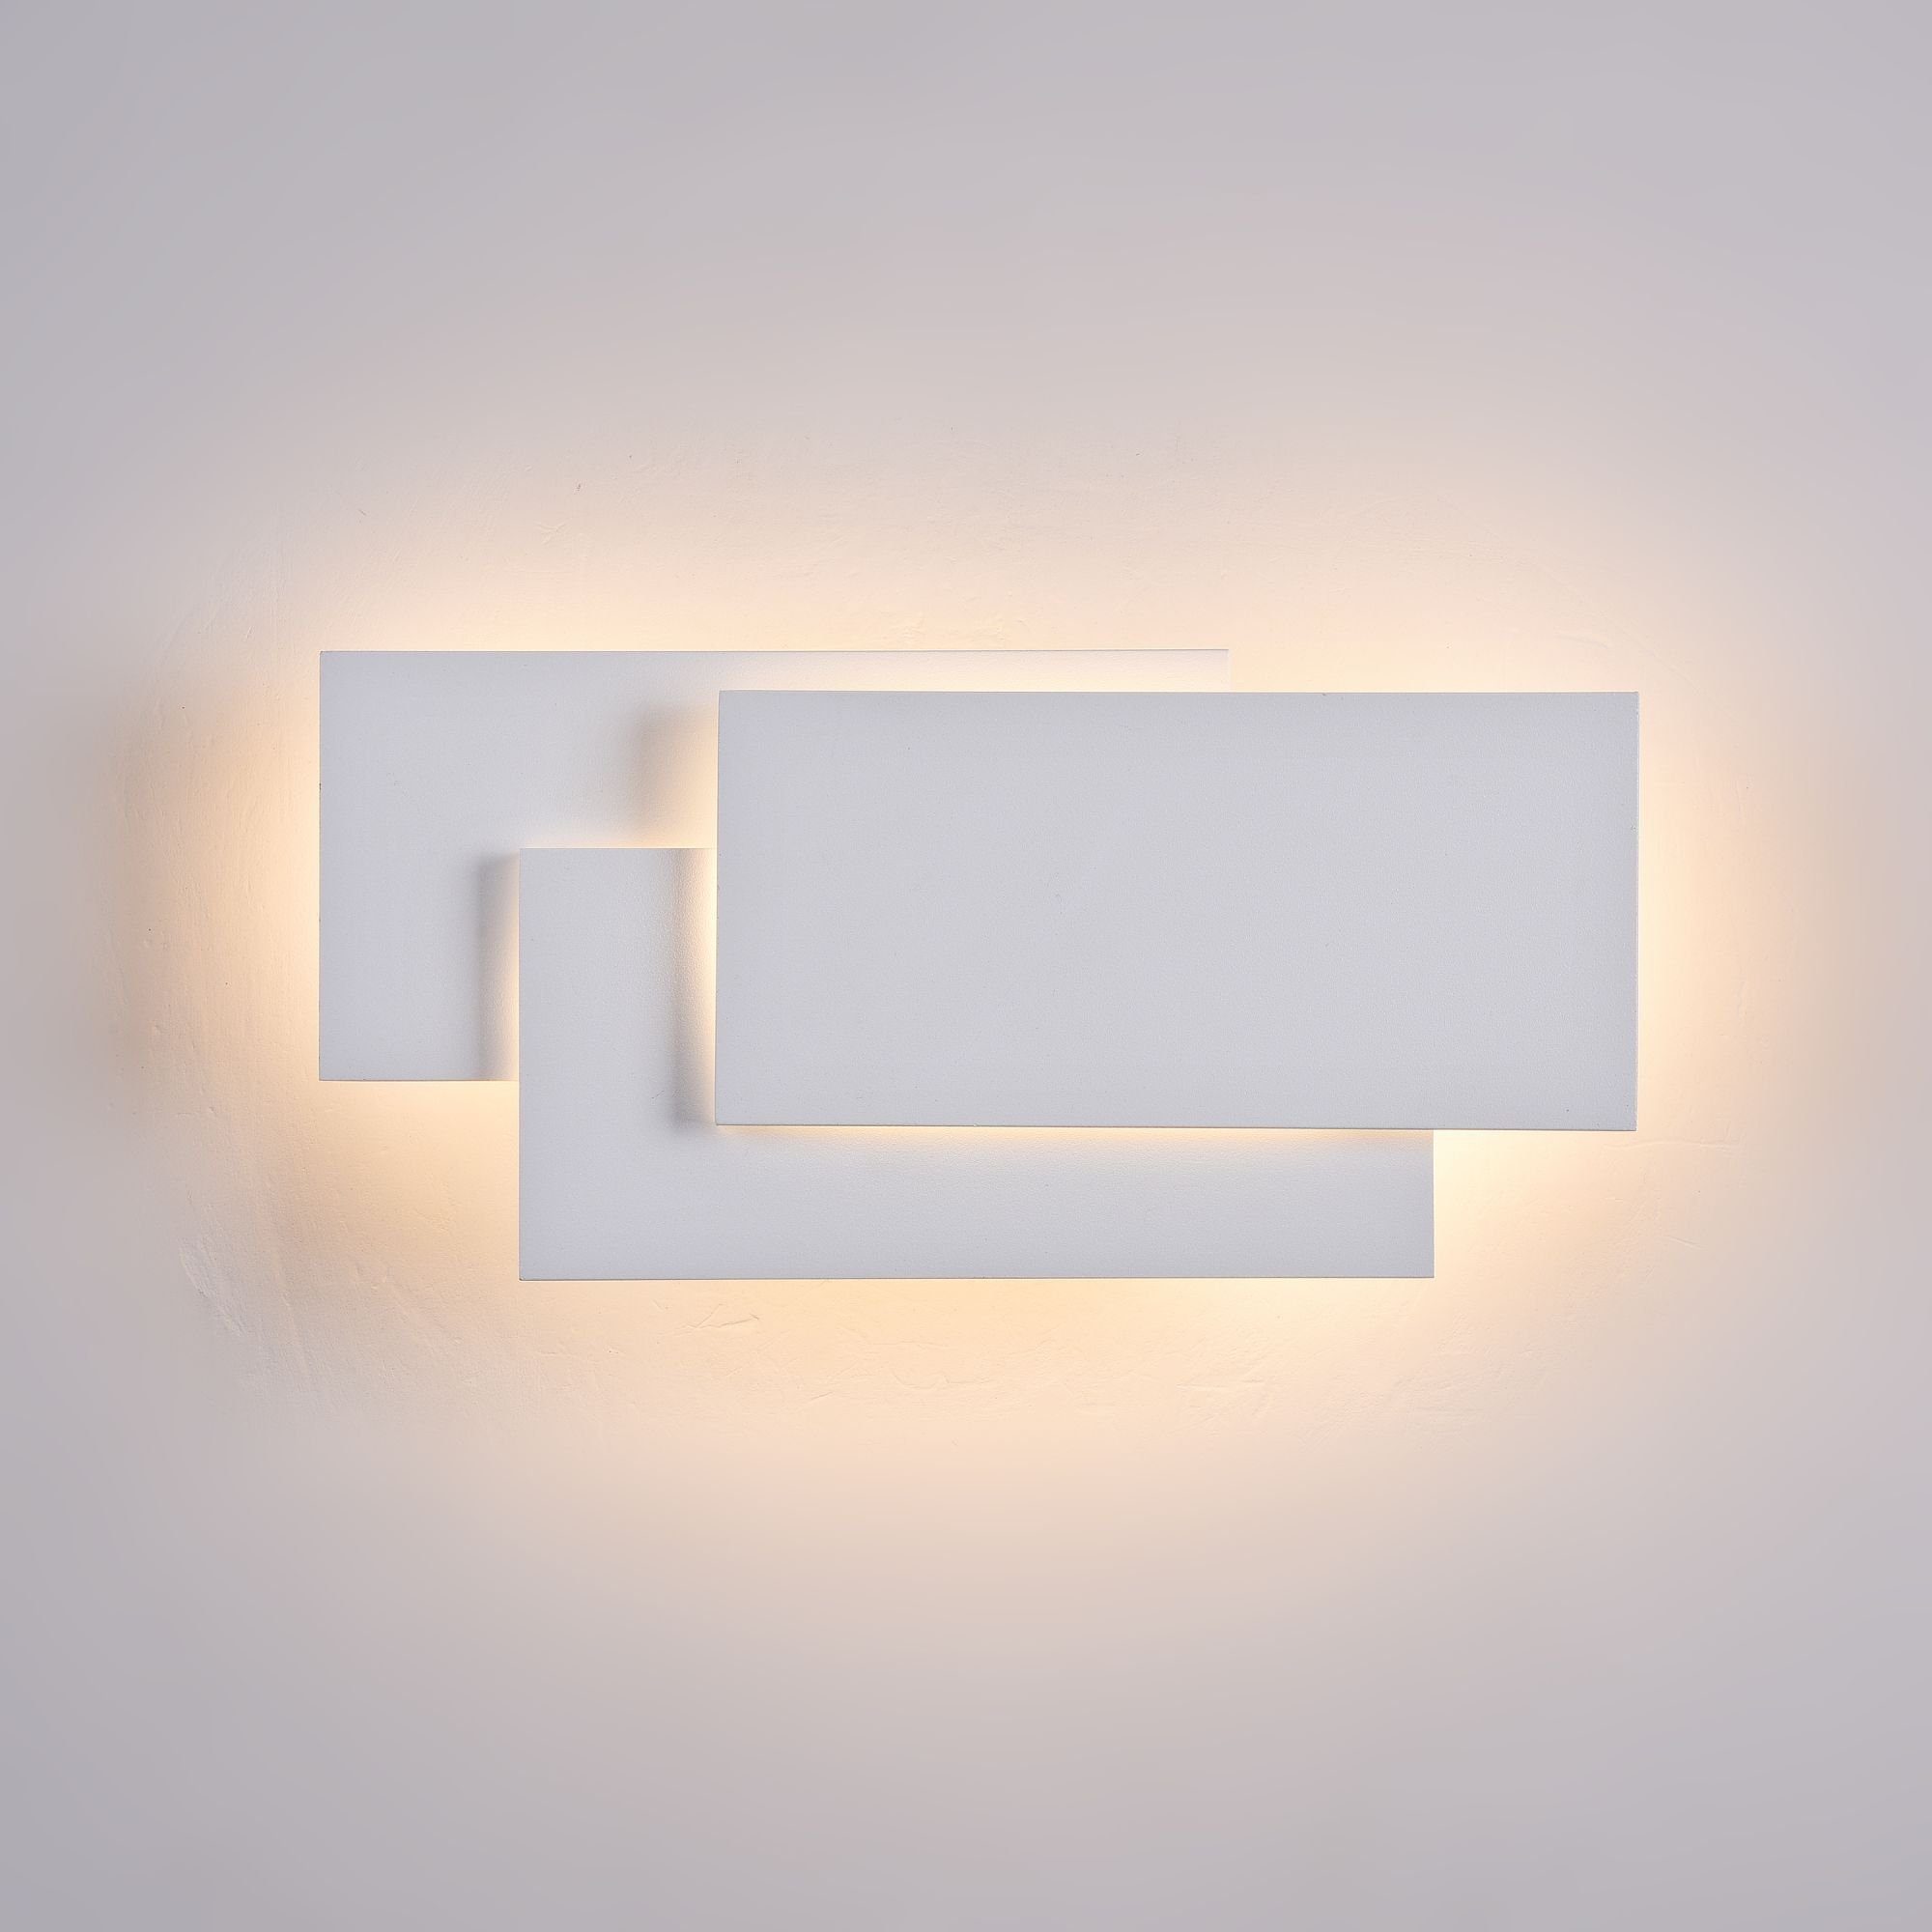 1 dekoratives cm, Trame Raumobjekt Wandleuchte Lampe 25x12.5x5.5 fest LED LIGHTING integriert, Design hochwertige MAYTONI & DECORATIVE